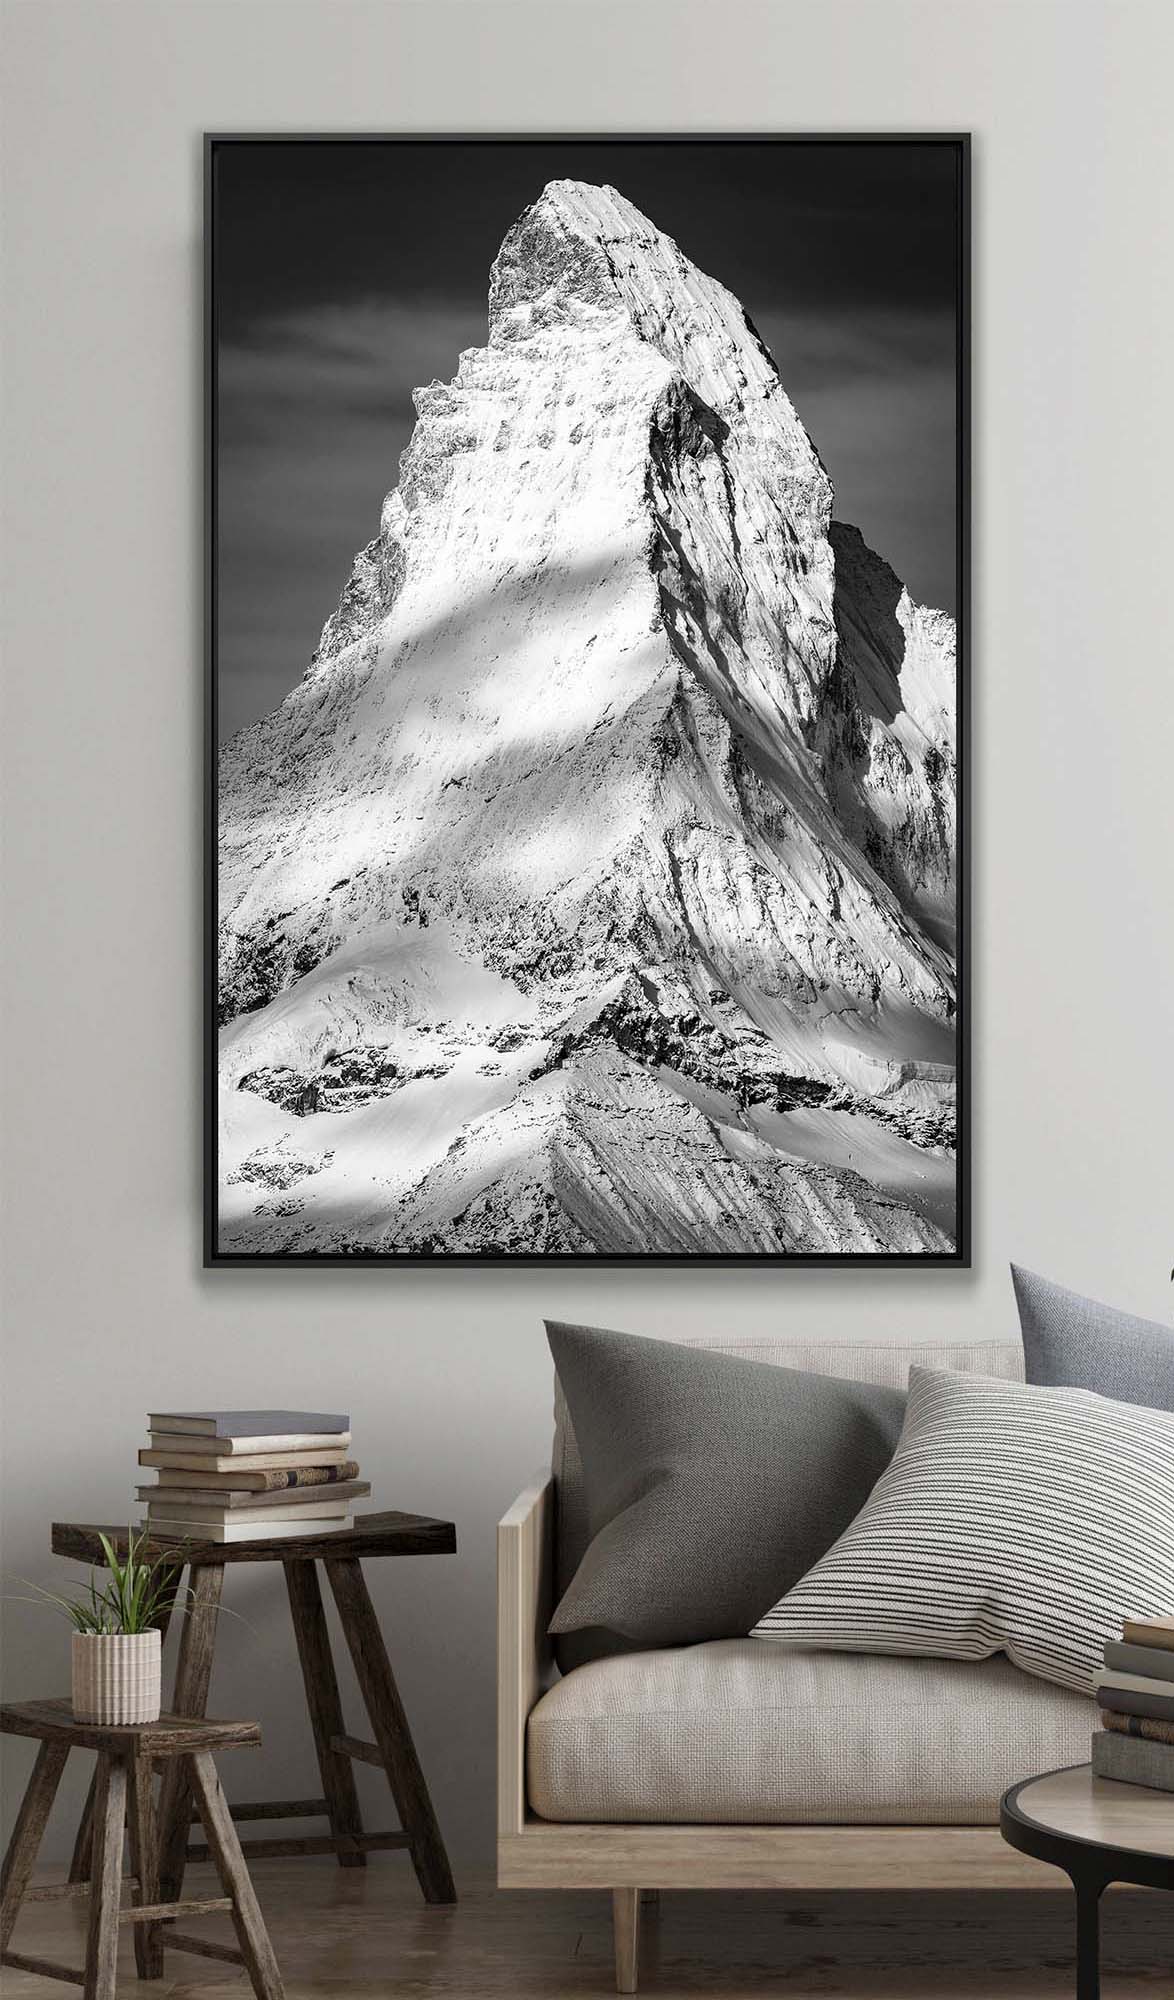 montagne photo - photo montagne grand format - cadre photo montagne noir et blanc - photo montagne alpes - tirage photo montagne grand format